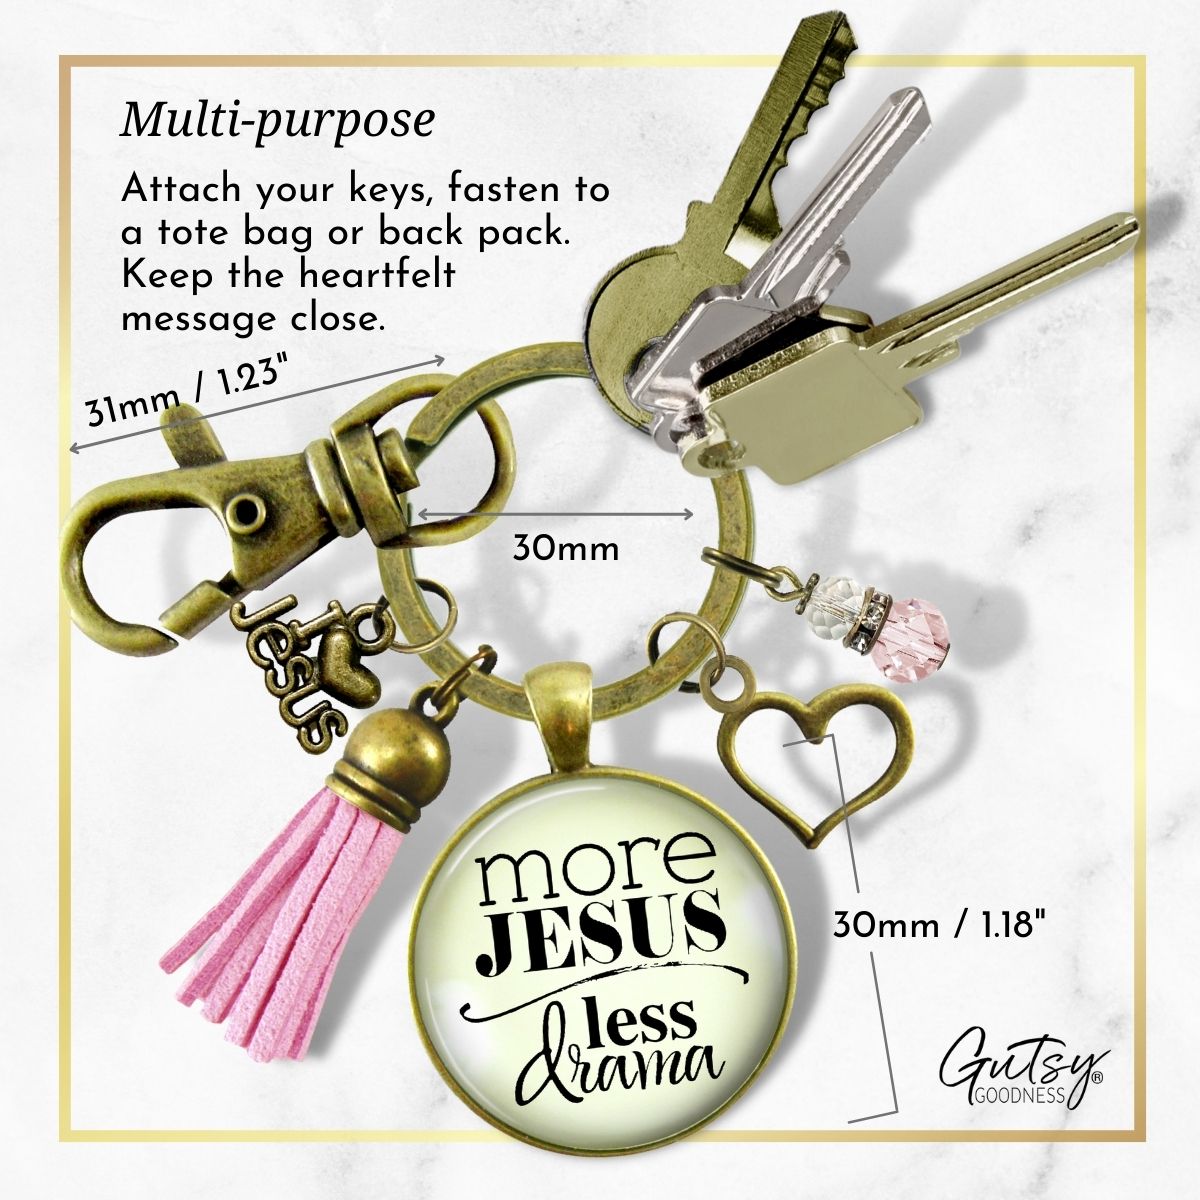 Handmade Gutsy Goodness Jewelry More Jesus Less Drama Faith Keychain Women's Purse Charm Boho Fashion Pink Tassel Charm & Card